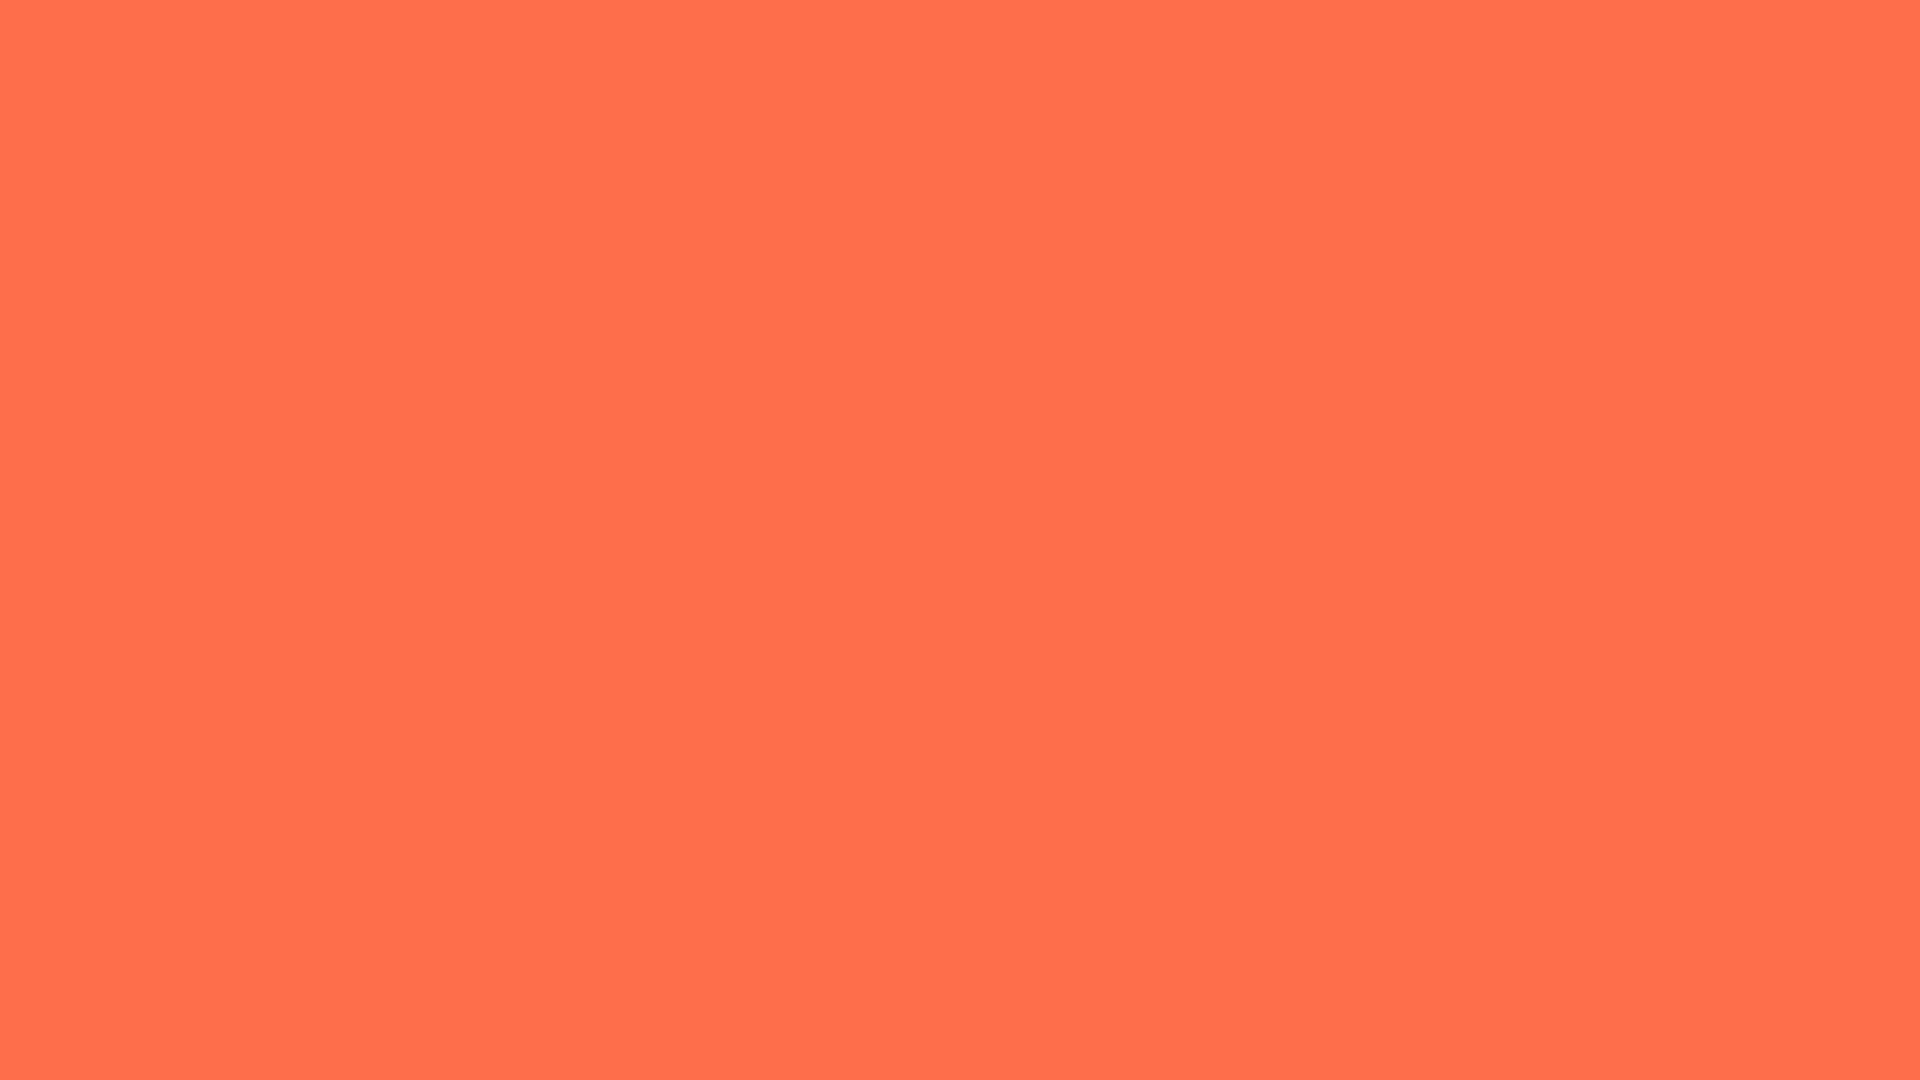 1920x1080 Outrageous Orange Solid Color Background